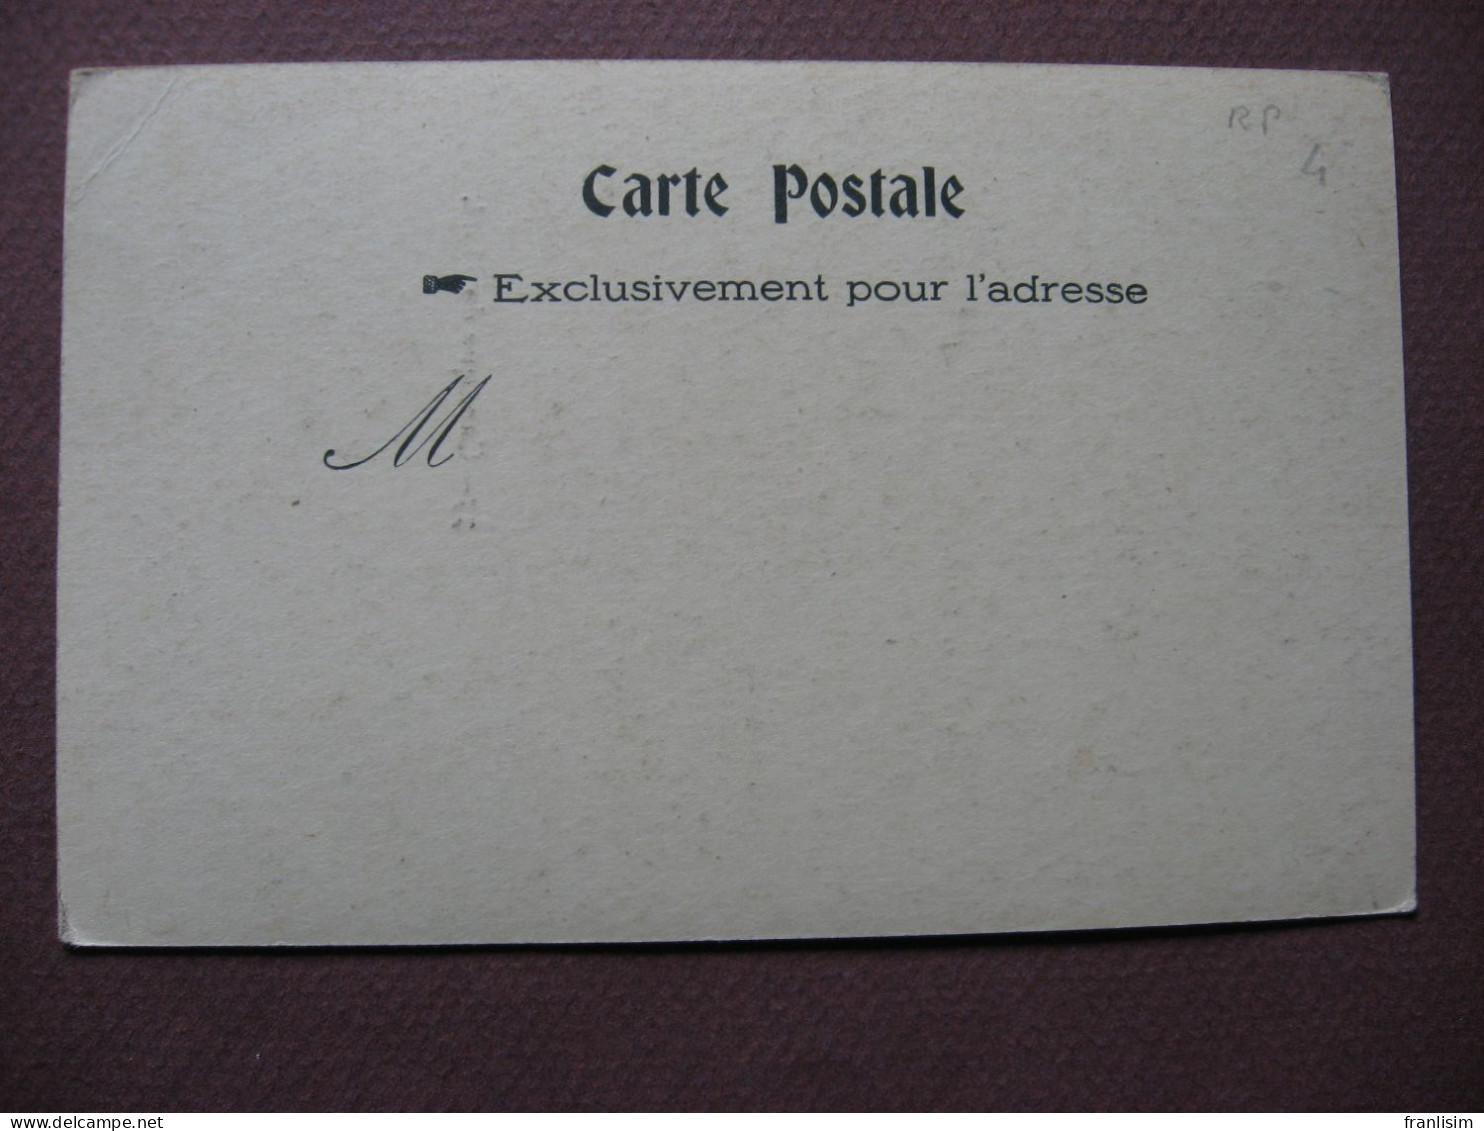 CPA FRANCE NOUVELLE CALEDONIE ETHNIQUE ETHNIE Kanak Canaque De Maré RARE ? CARTE PRECURSEUR ( Avant 1905 ) - New Caledonia